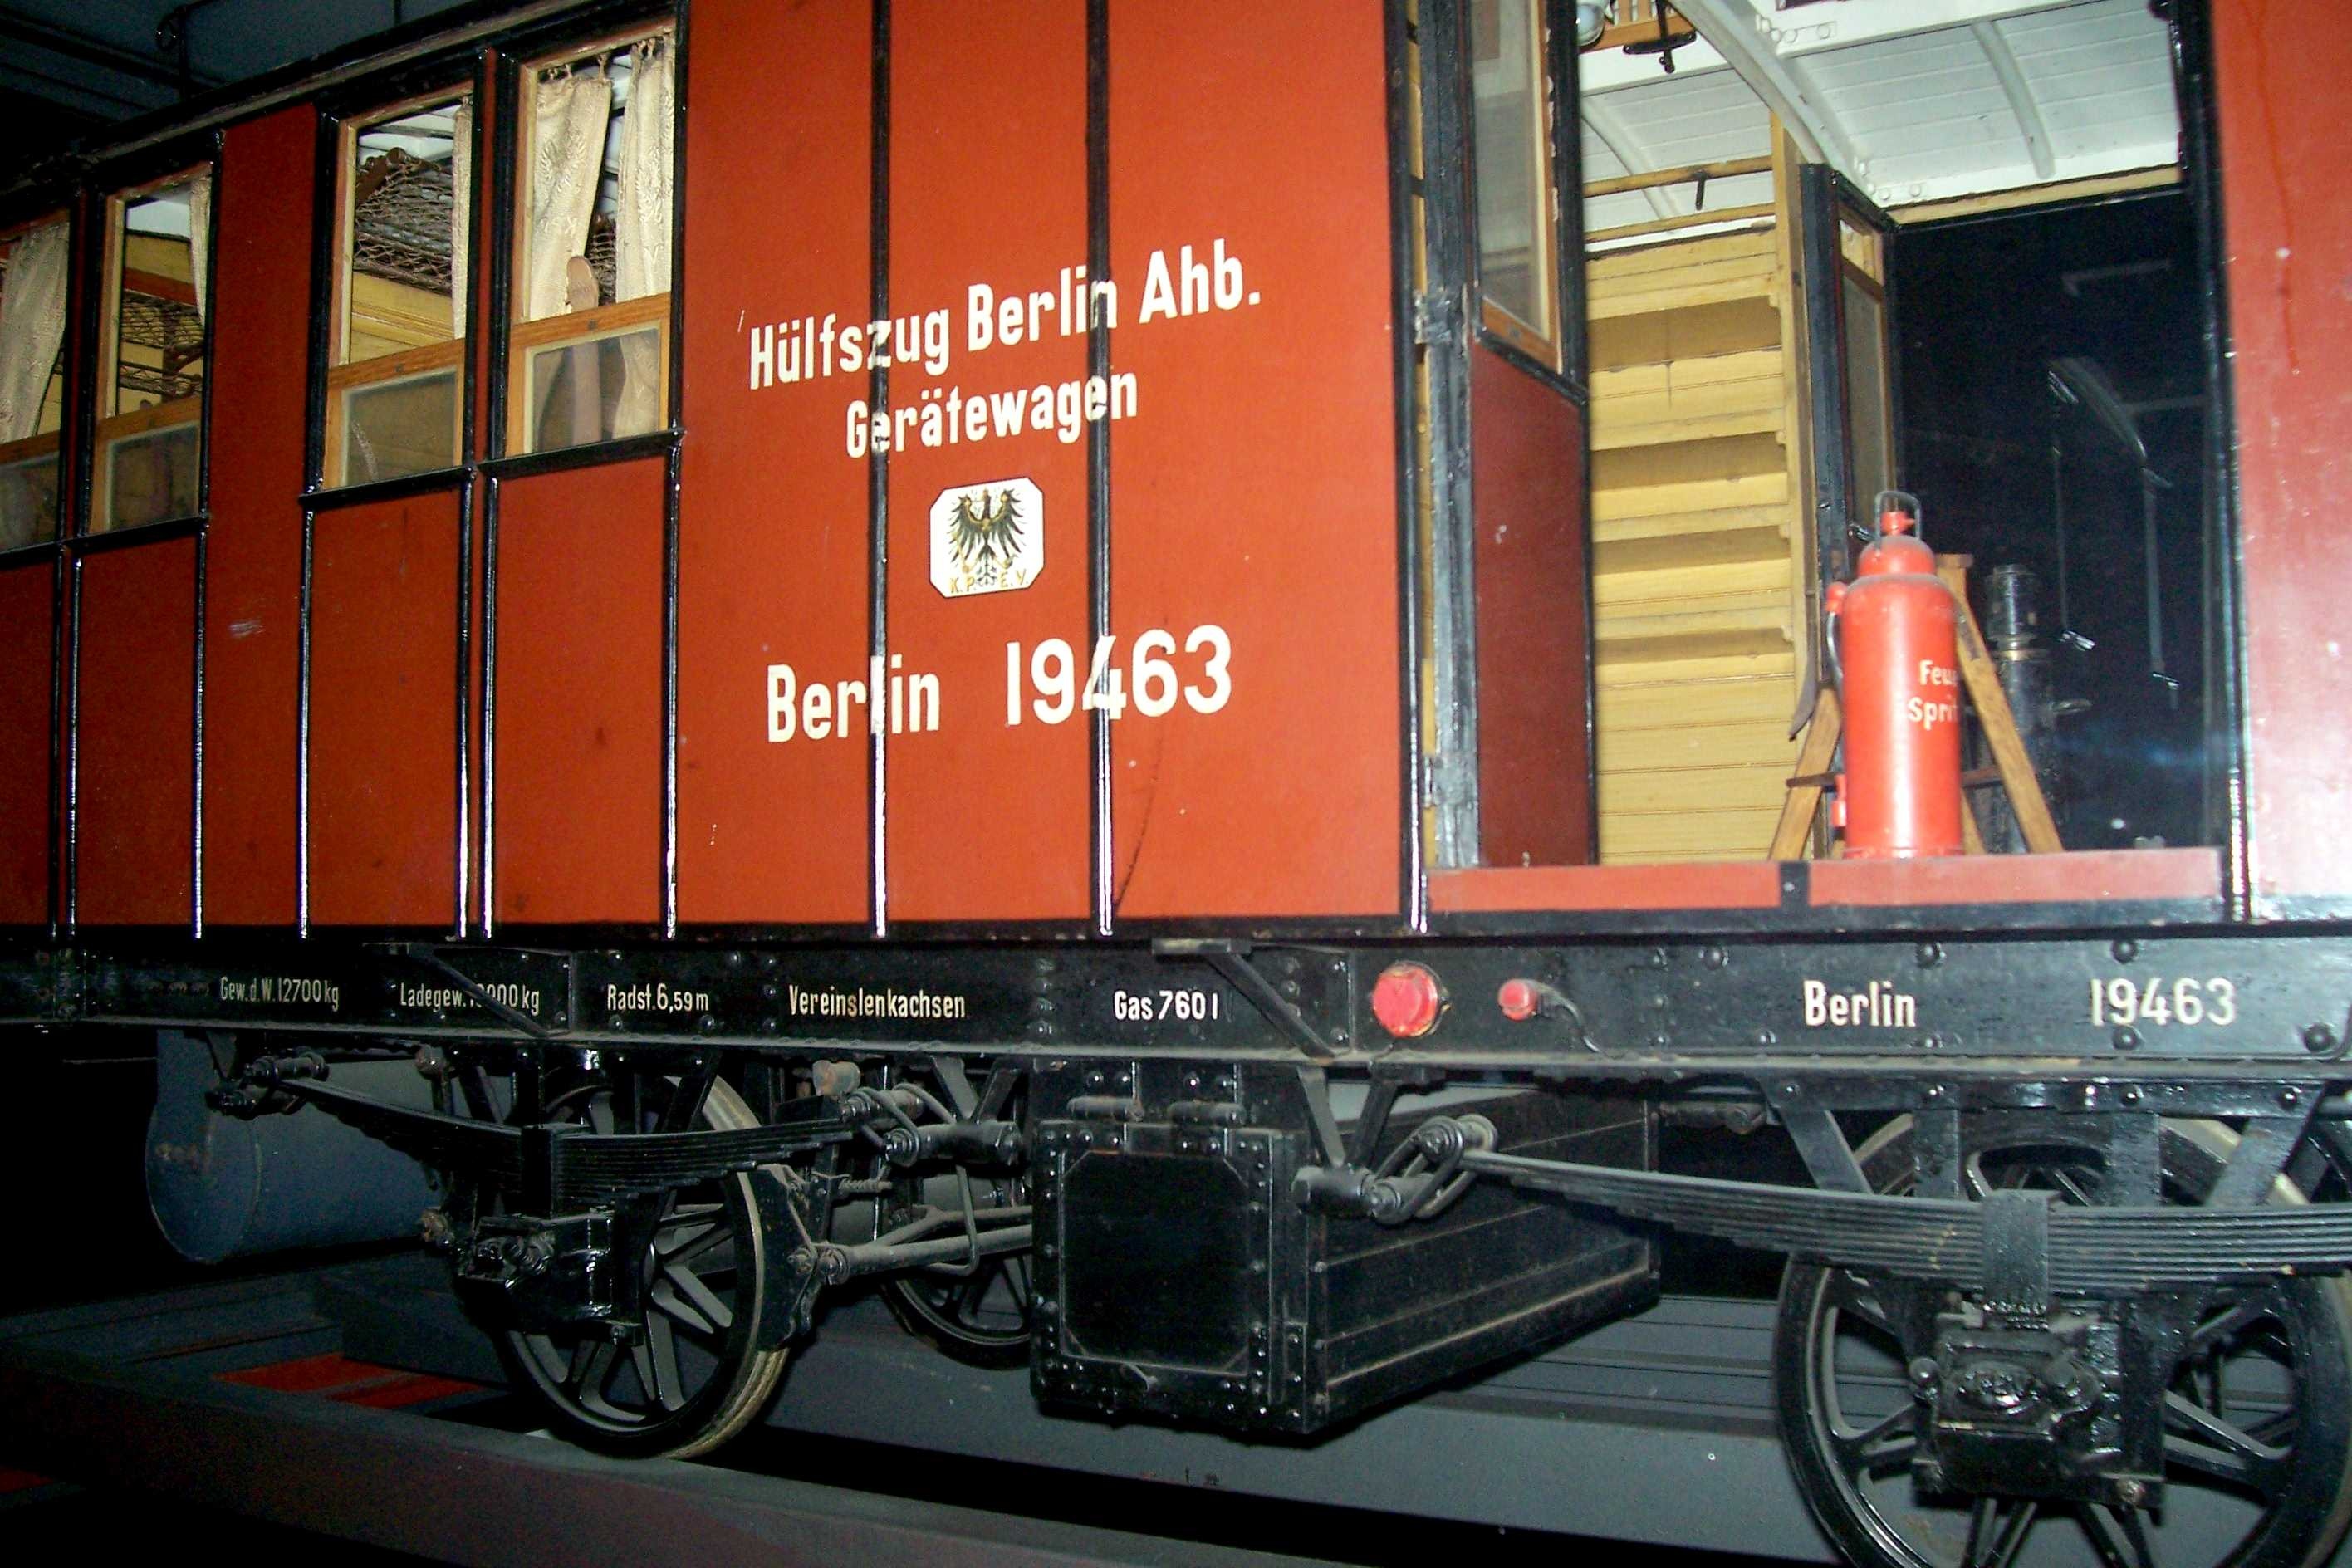 Hilfszug-Gerätewagen "Berlin 19493" Anhalter Bahnhof, Modell 1:5 (Stiftung Deutsches Technikmuseum Berlin CC0)